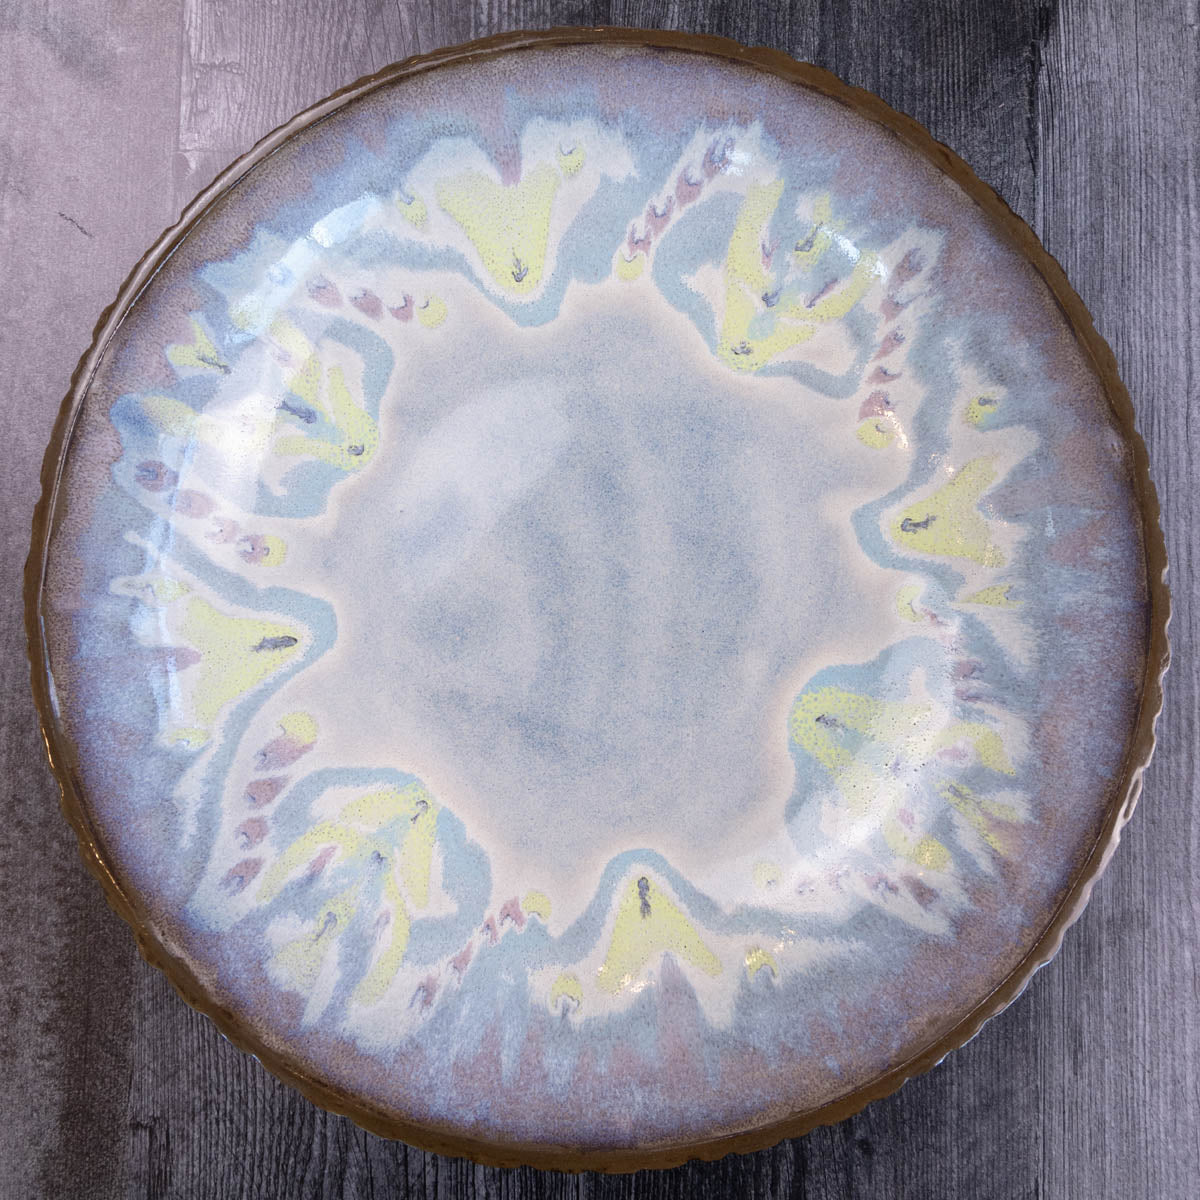 XXL Dark Chocolate Stoneware Serving/Decorative Bowl - Greens, Blues, & Creams (Alchemy Collection)